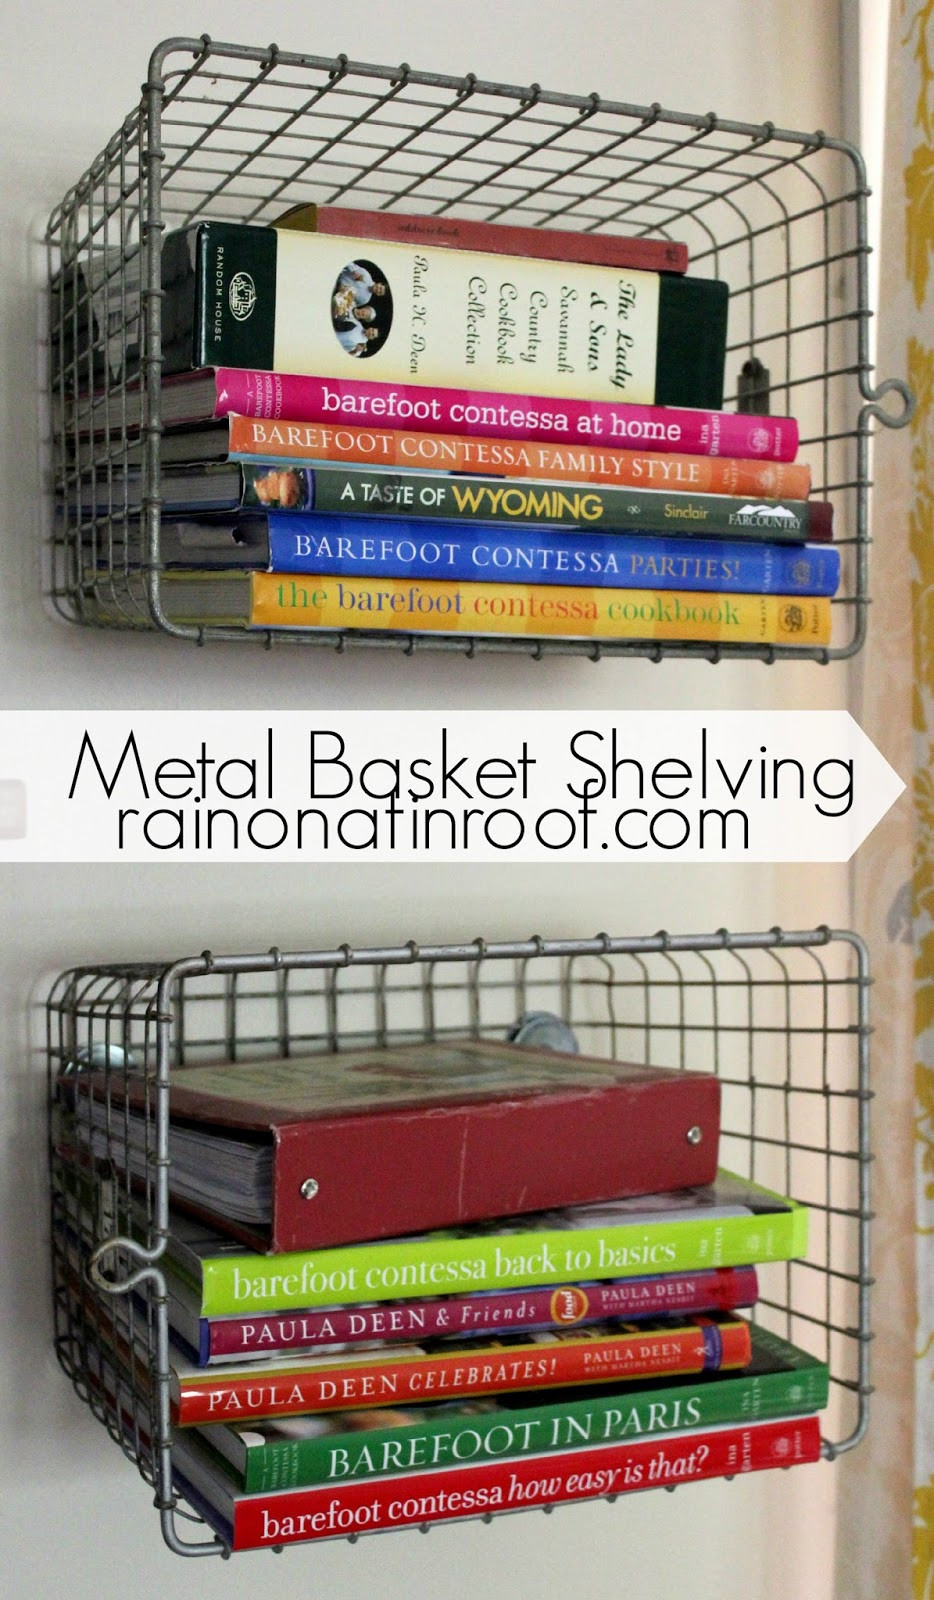 Best ideas about DIY Locker Shelf
. Save or Pin DIY Metal Basket Shelving With Old Locker Baskets Now.